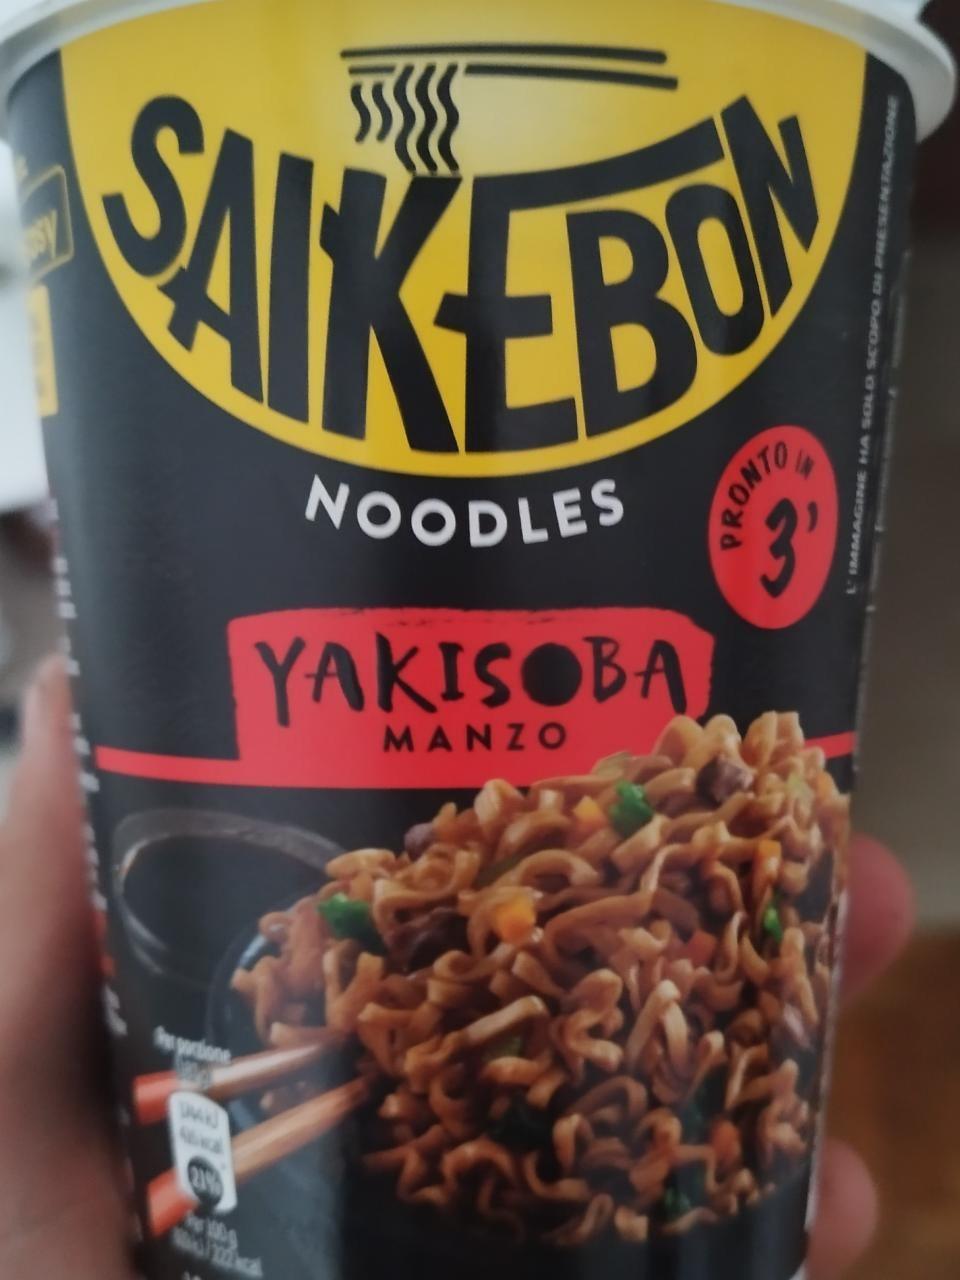 Fotografie - saikebon noodles yakisoba manzo